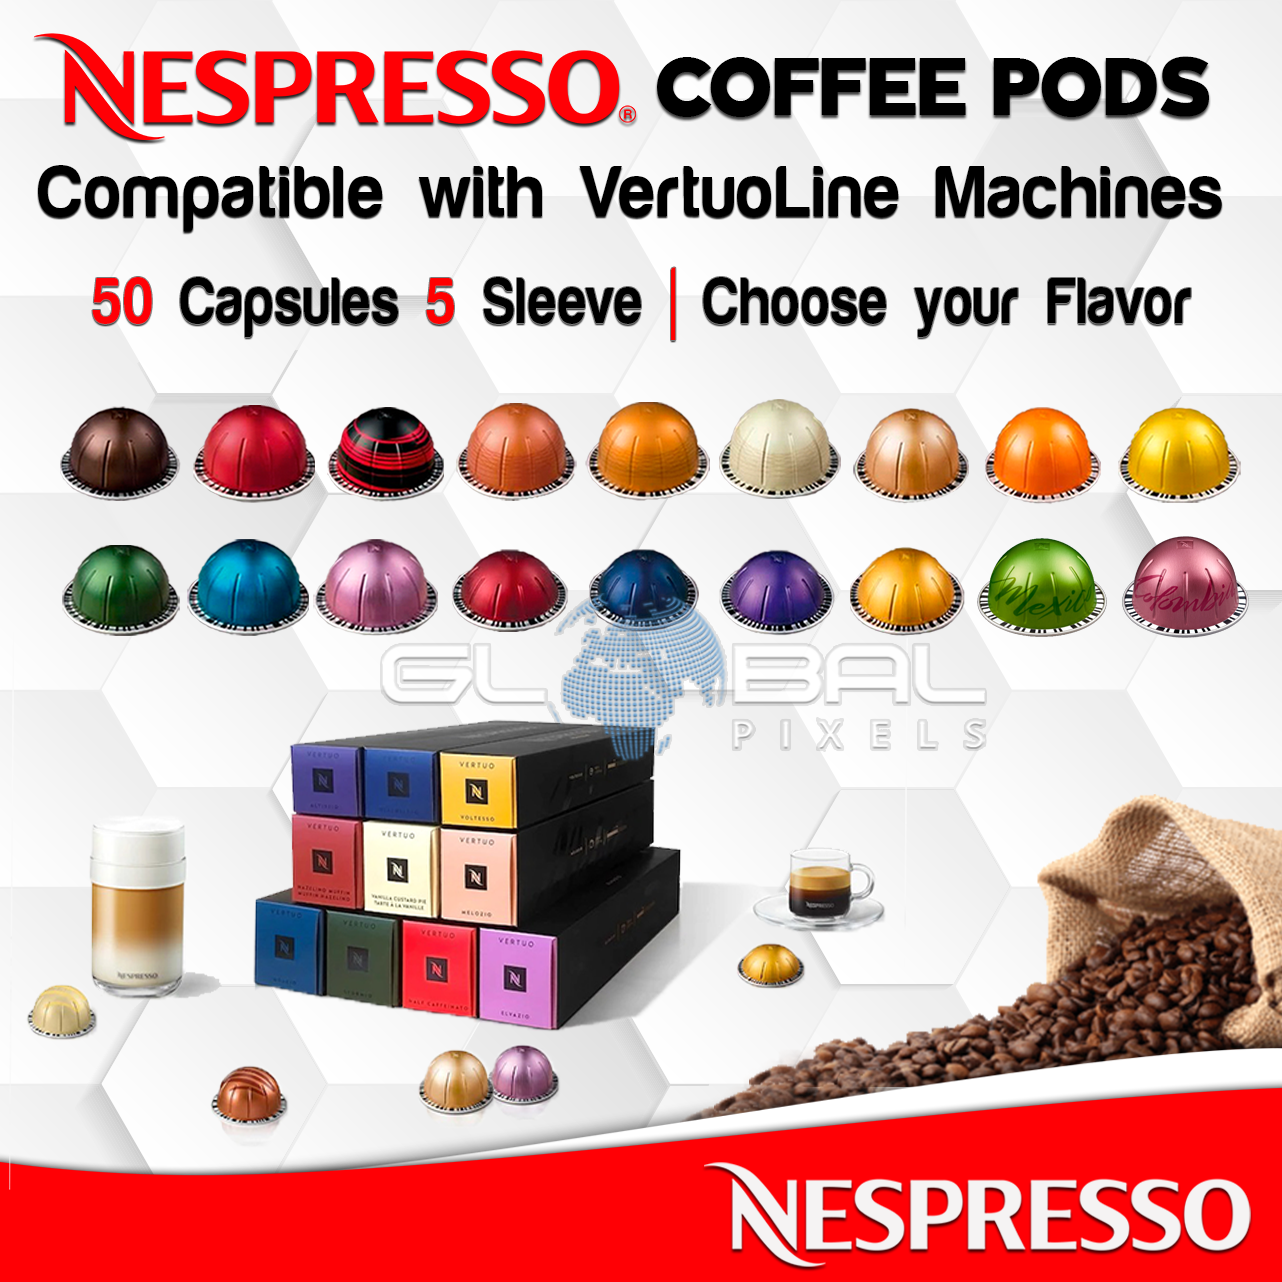 meesteres Snoep Faeröer NESPRESSO Coffee 50 Pods VERTUOLINE All Flavors 5 Sleeves OR Variety Pack  lot ☕ | eBay